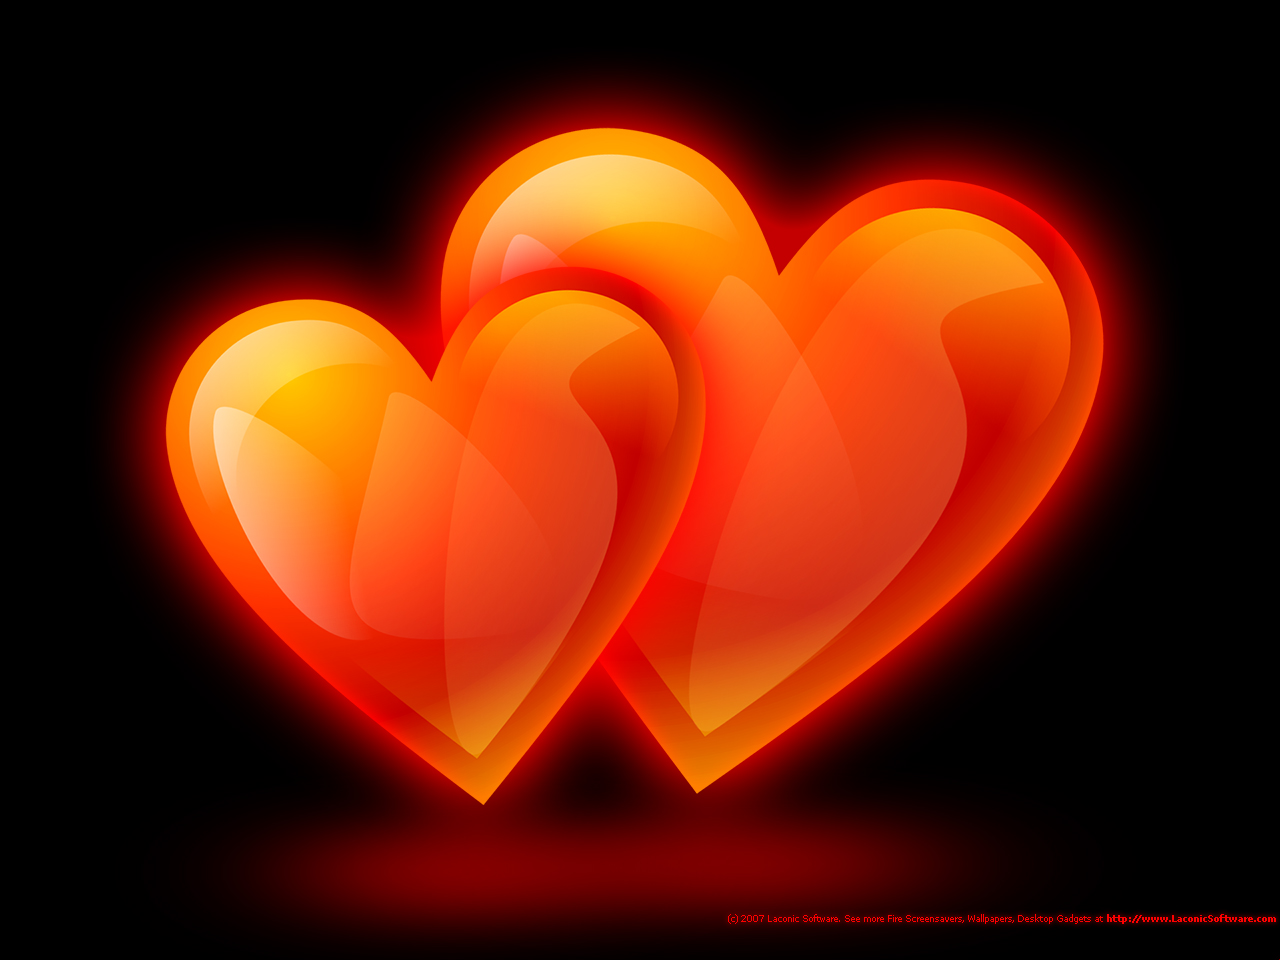 http://3.bp.blogspot.com/_7W9YQPf6V28/TKByy2zGF2I/AAAAAAAAAAU/b6lRoxYFc2A/s1600/couple-of-hearts-of-flame-wallpaper-1280x960.jpg